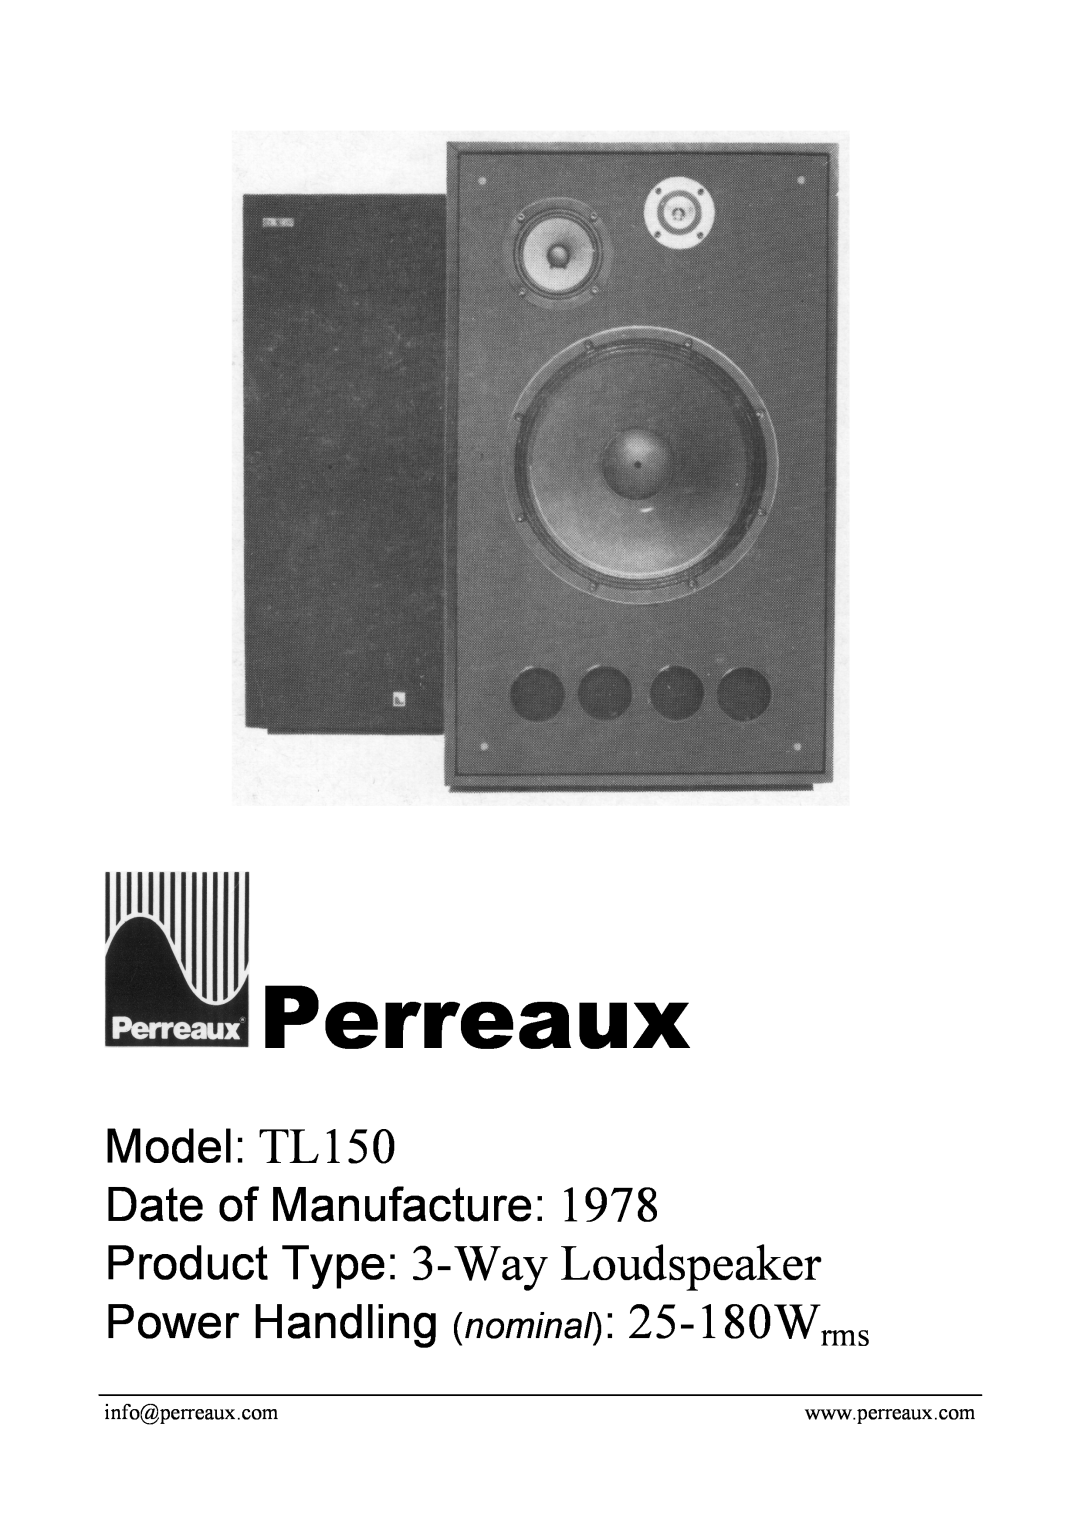 Perreaux manual Perreaux, Product Type 3-WayLoudspeaker, Model TL150 Date of Manufacture 